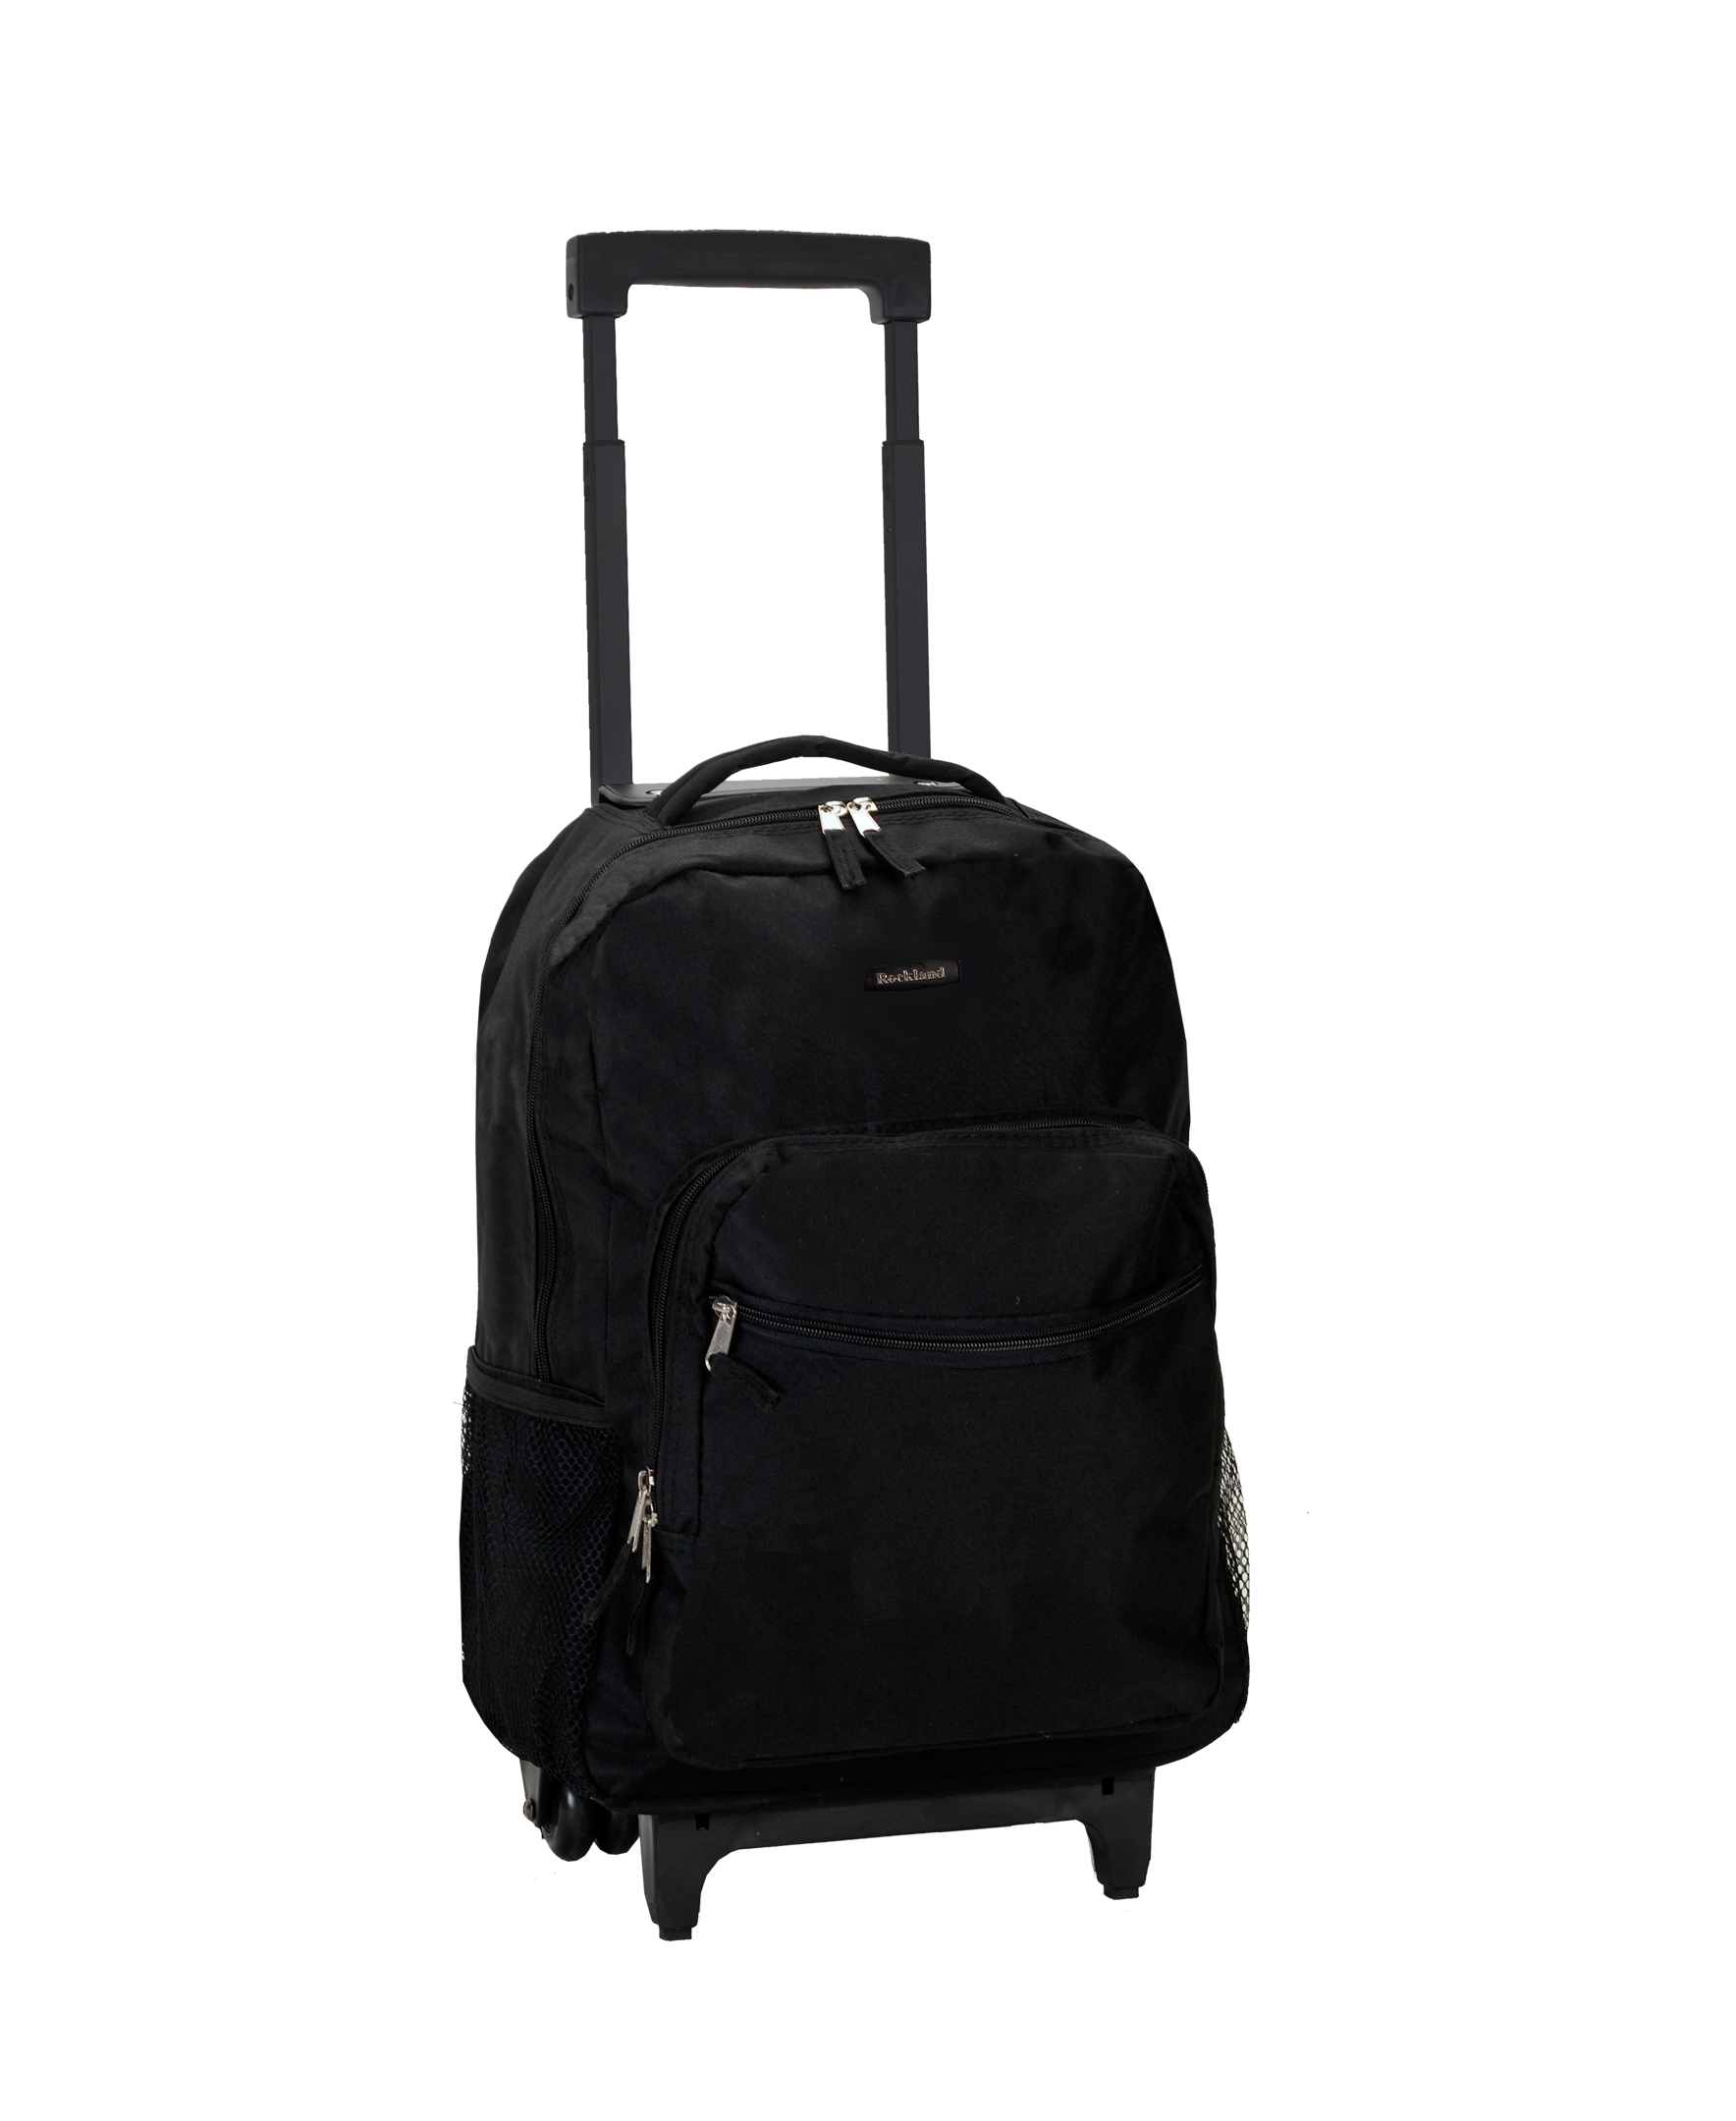 Rockland Unisex Luggage 17" Rolling Backpack R01 Black - image 1 of 4